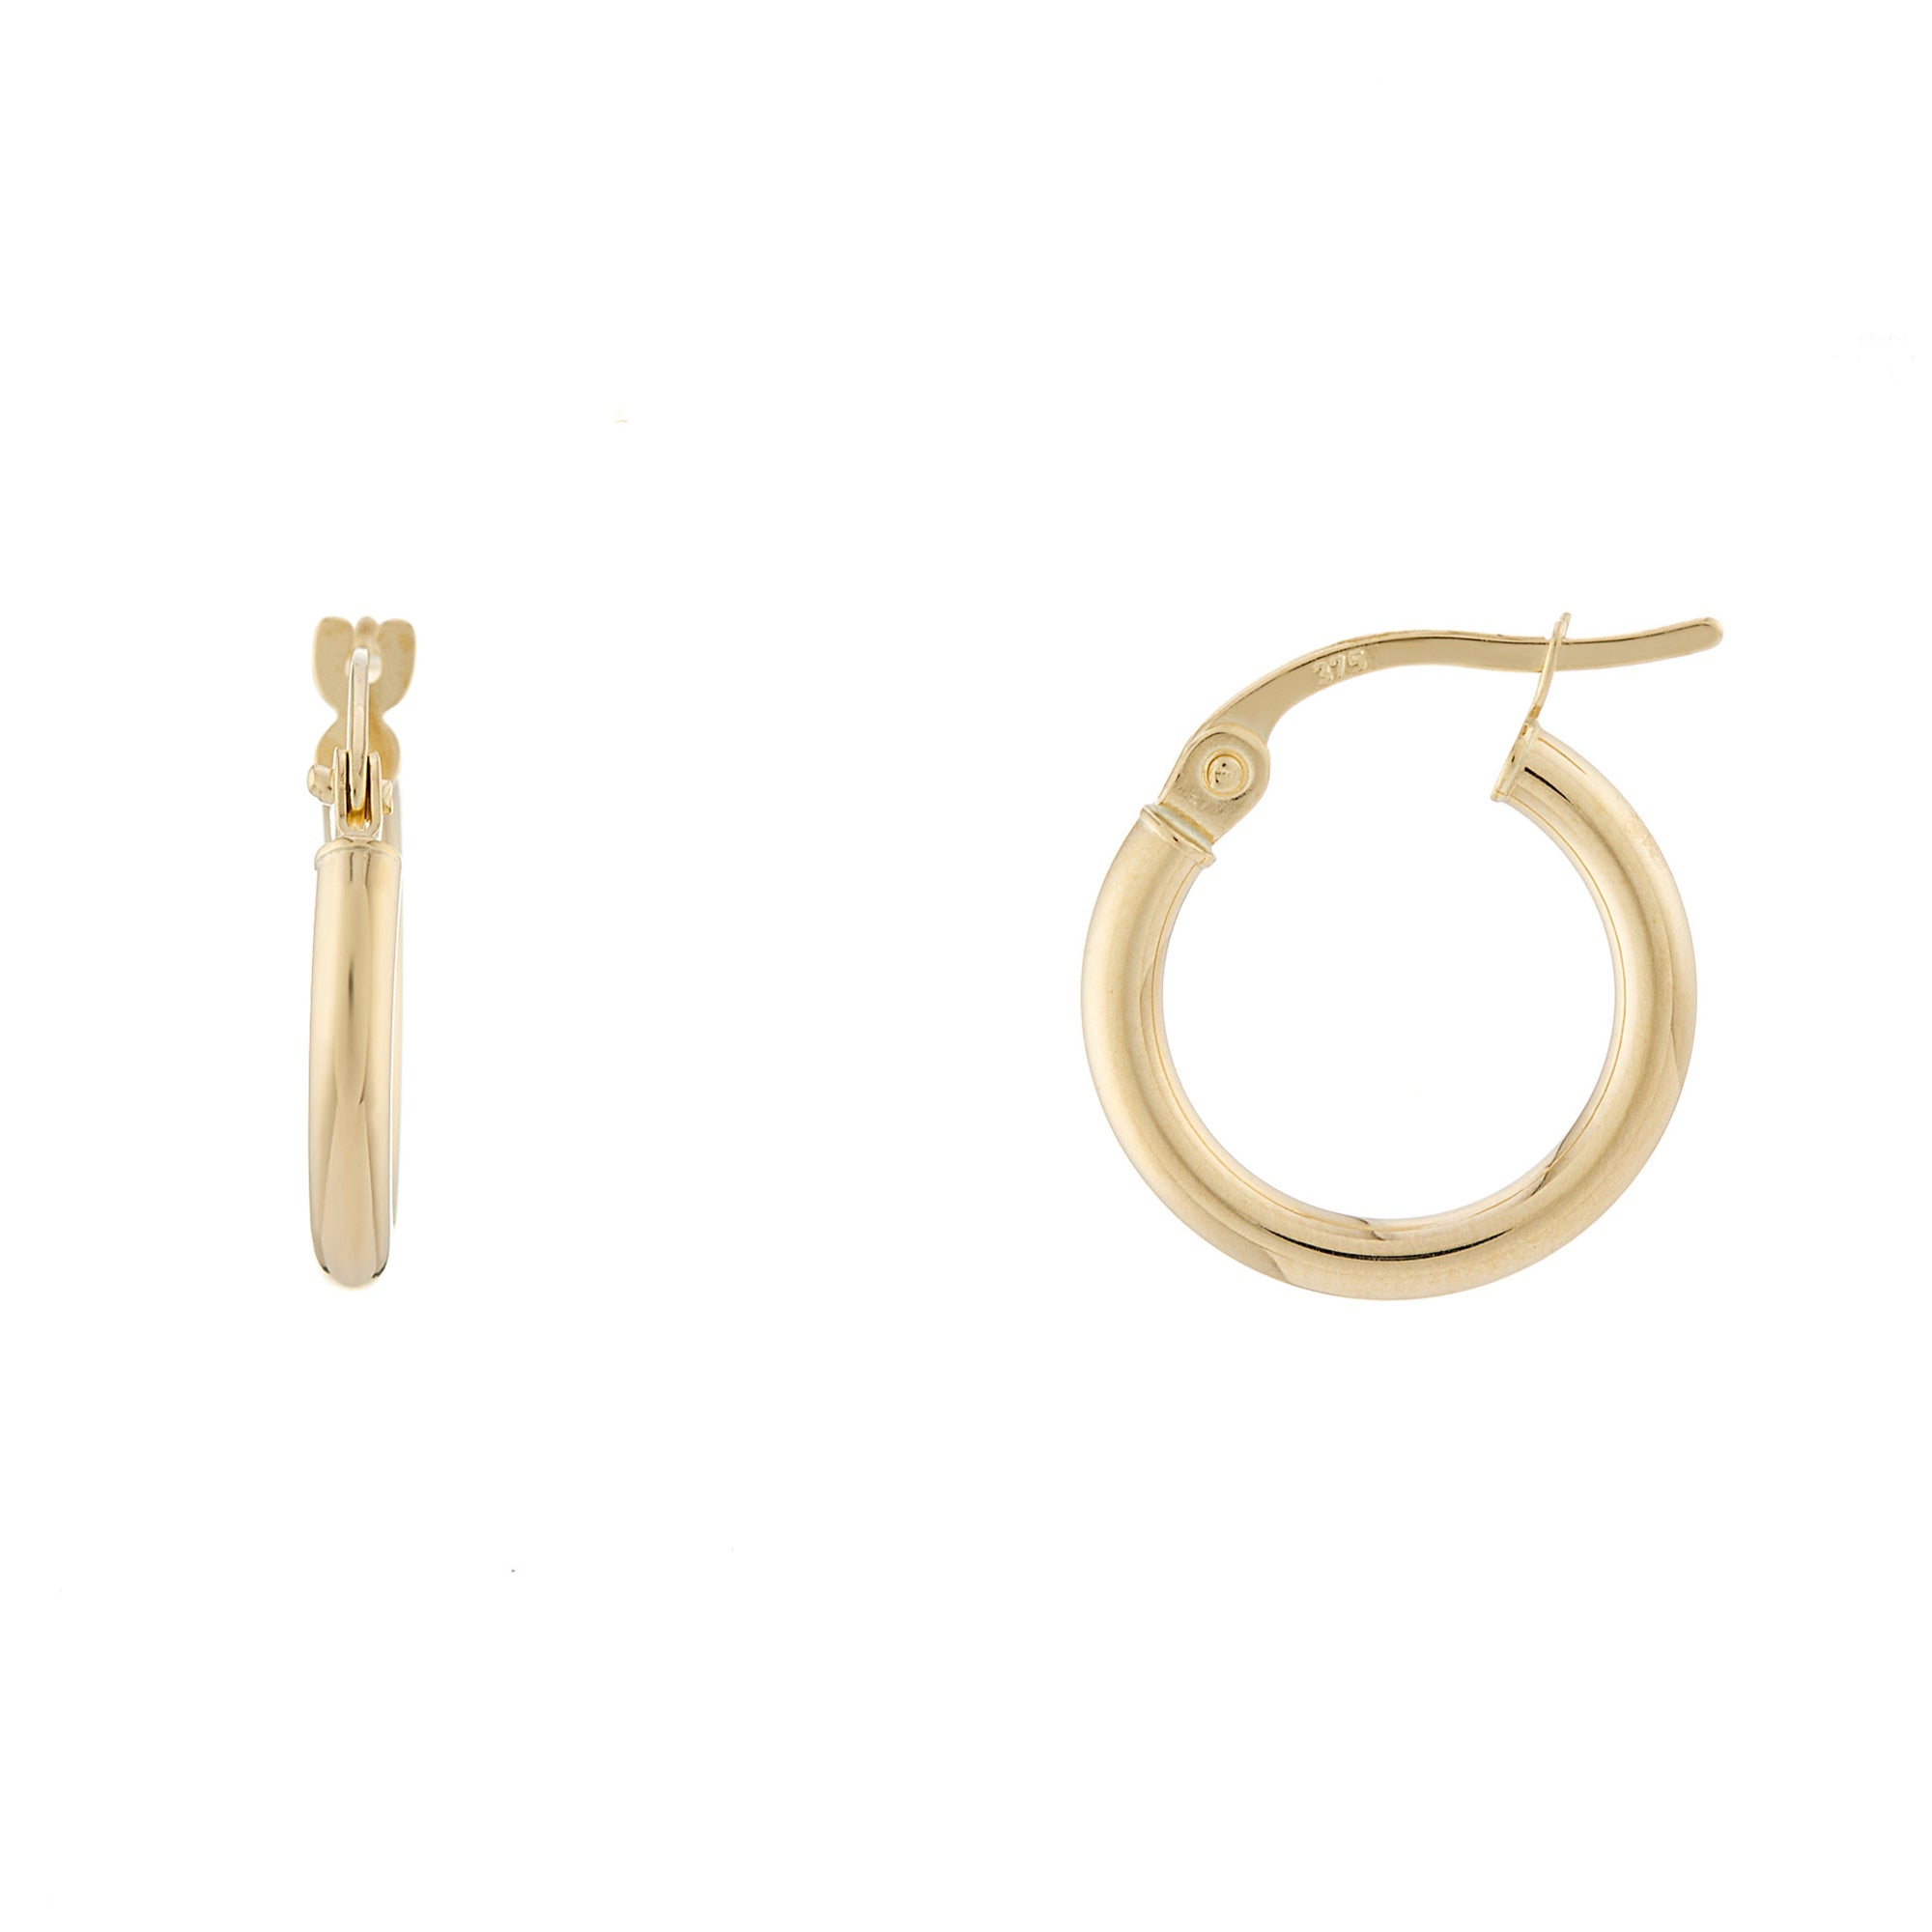 9ct gold plain 2mm x 10mm hoop earrings